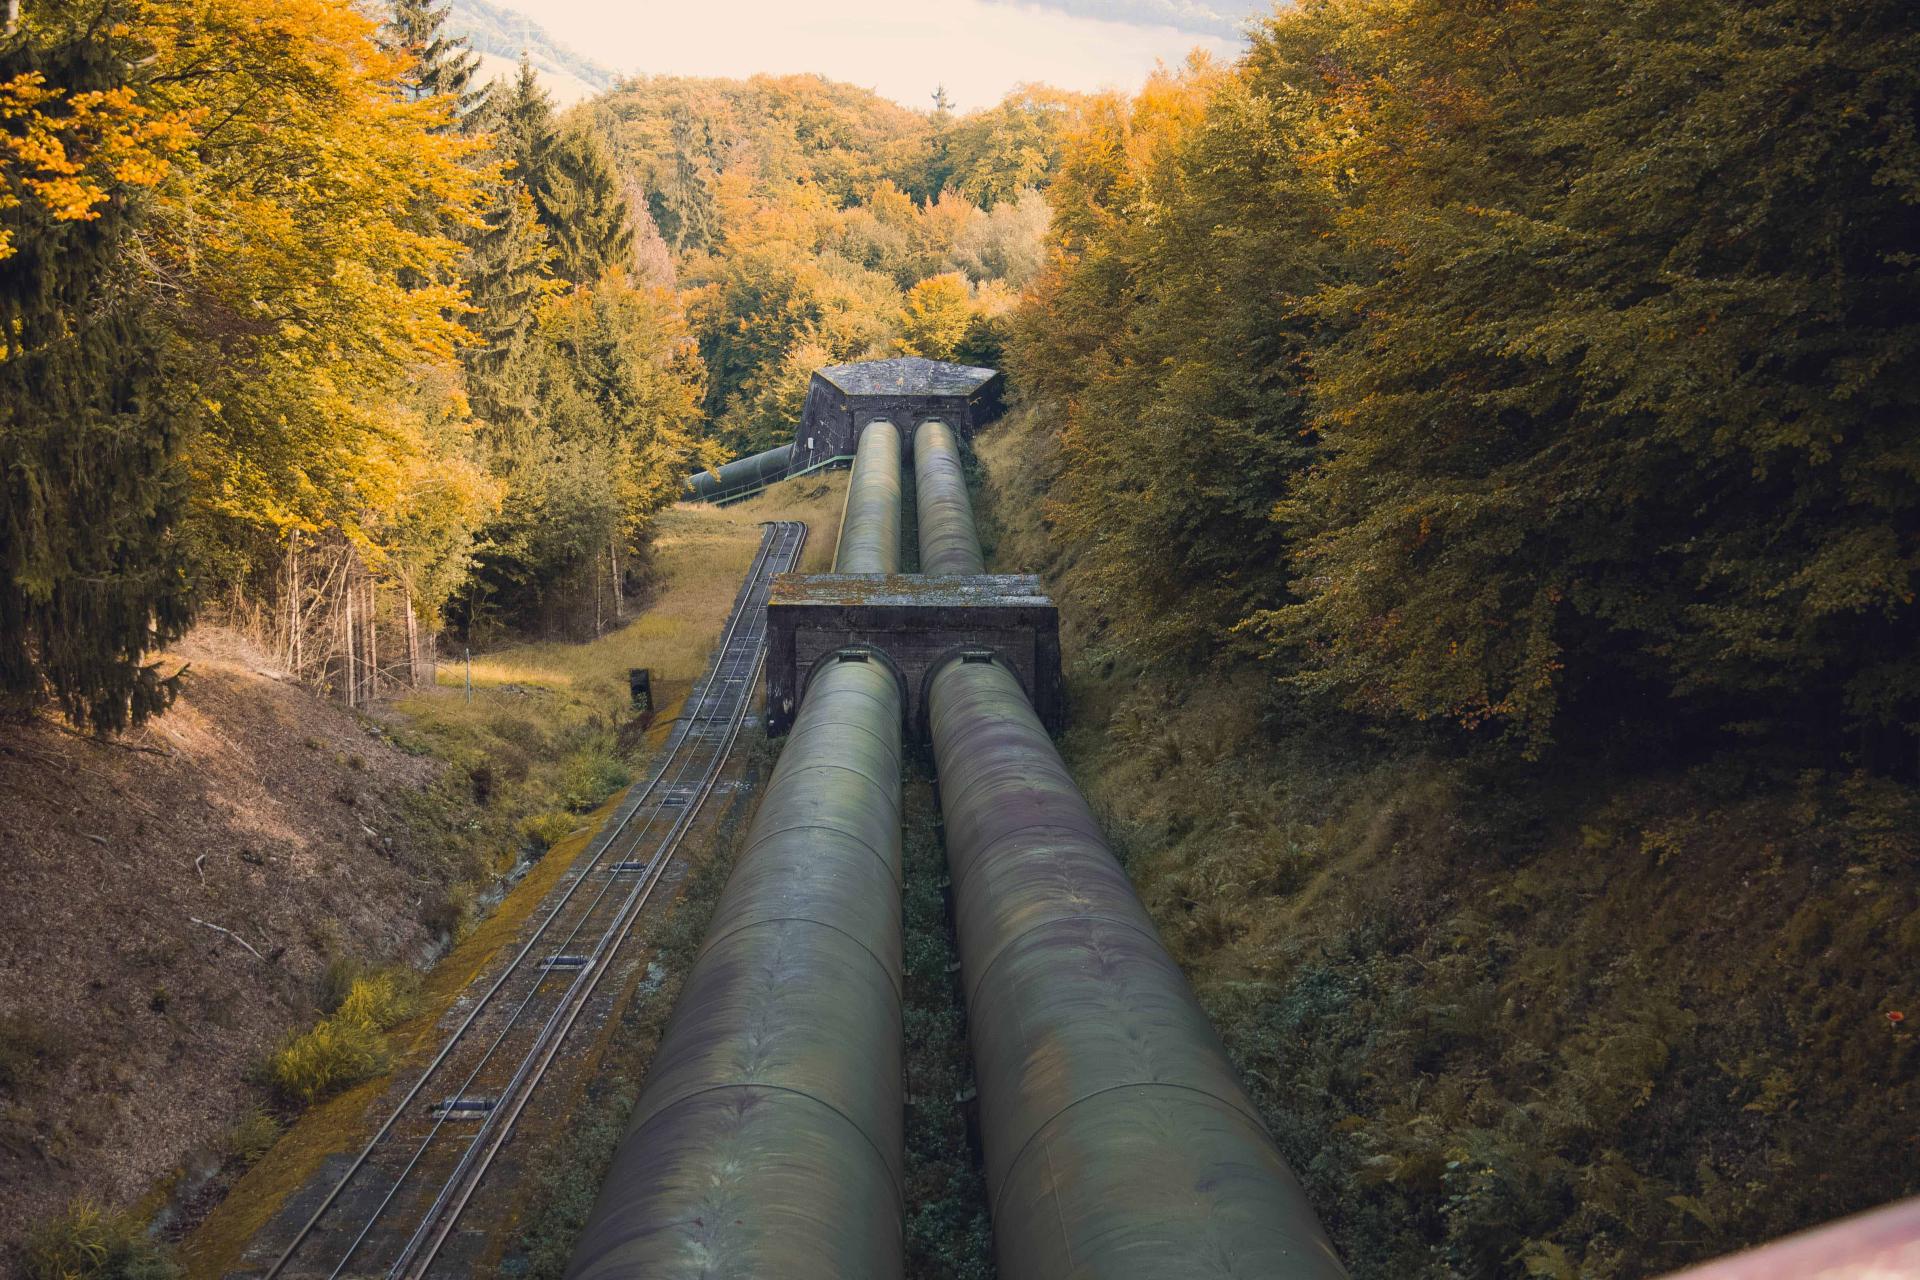 Gas pipeline in Germany